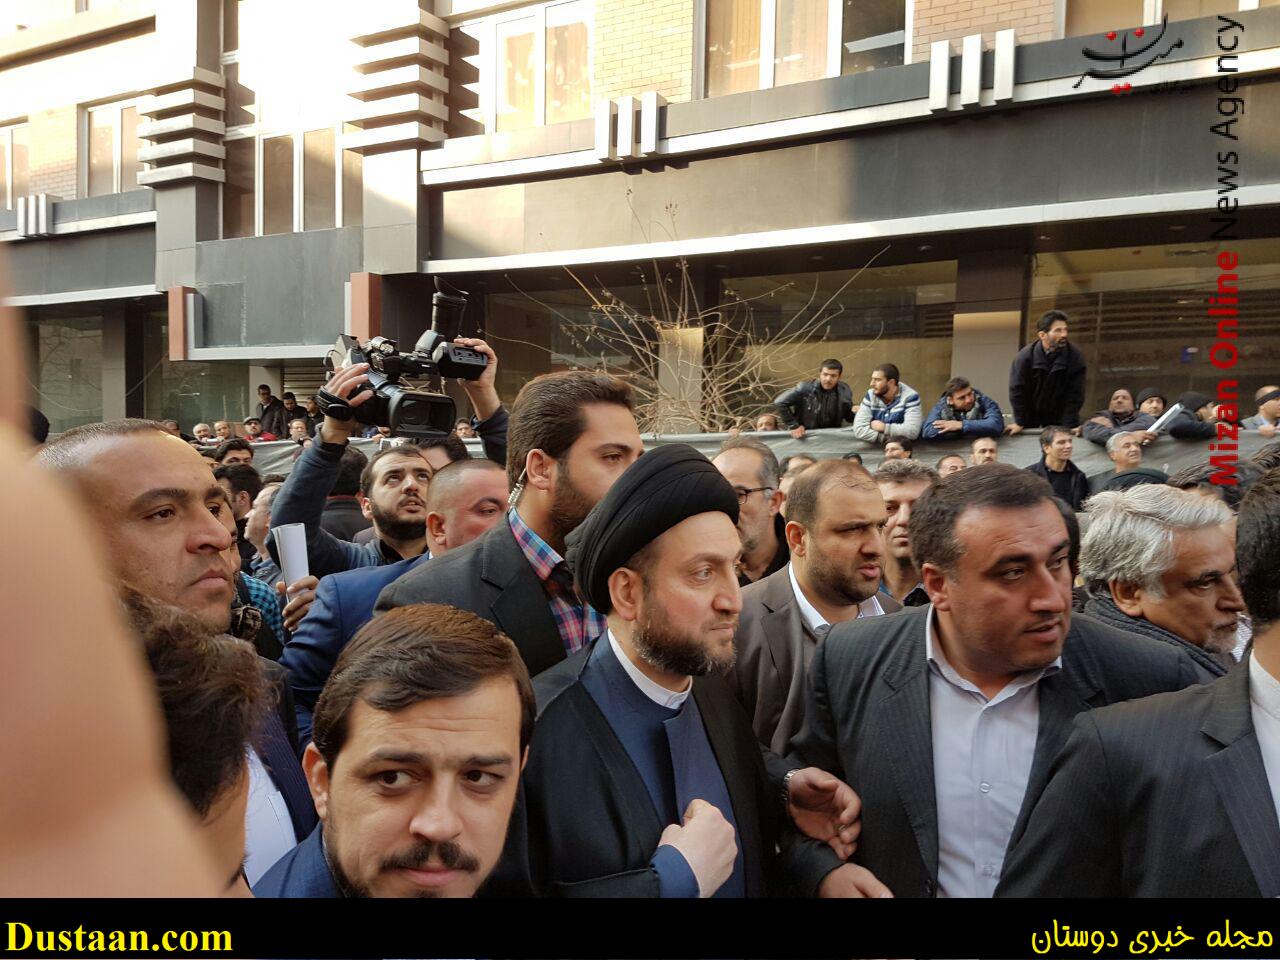 www.dustaan.com-عکس: حضور رییس مجلس اعلای عراق در مراسم آیت الله هاشمی